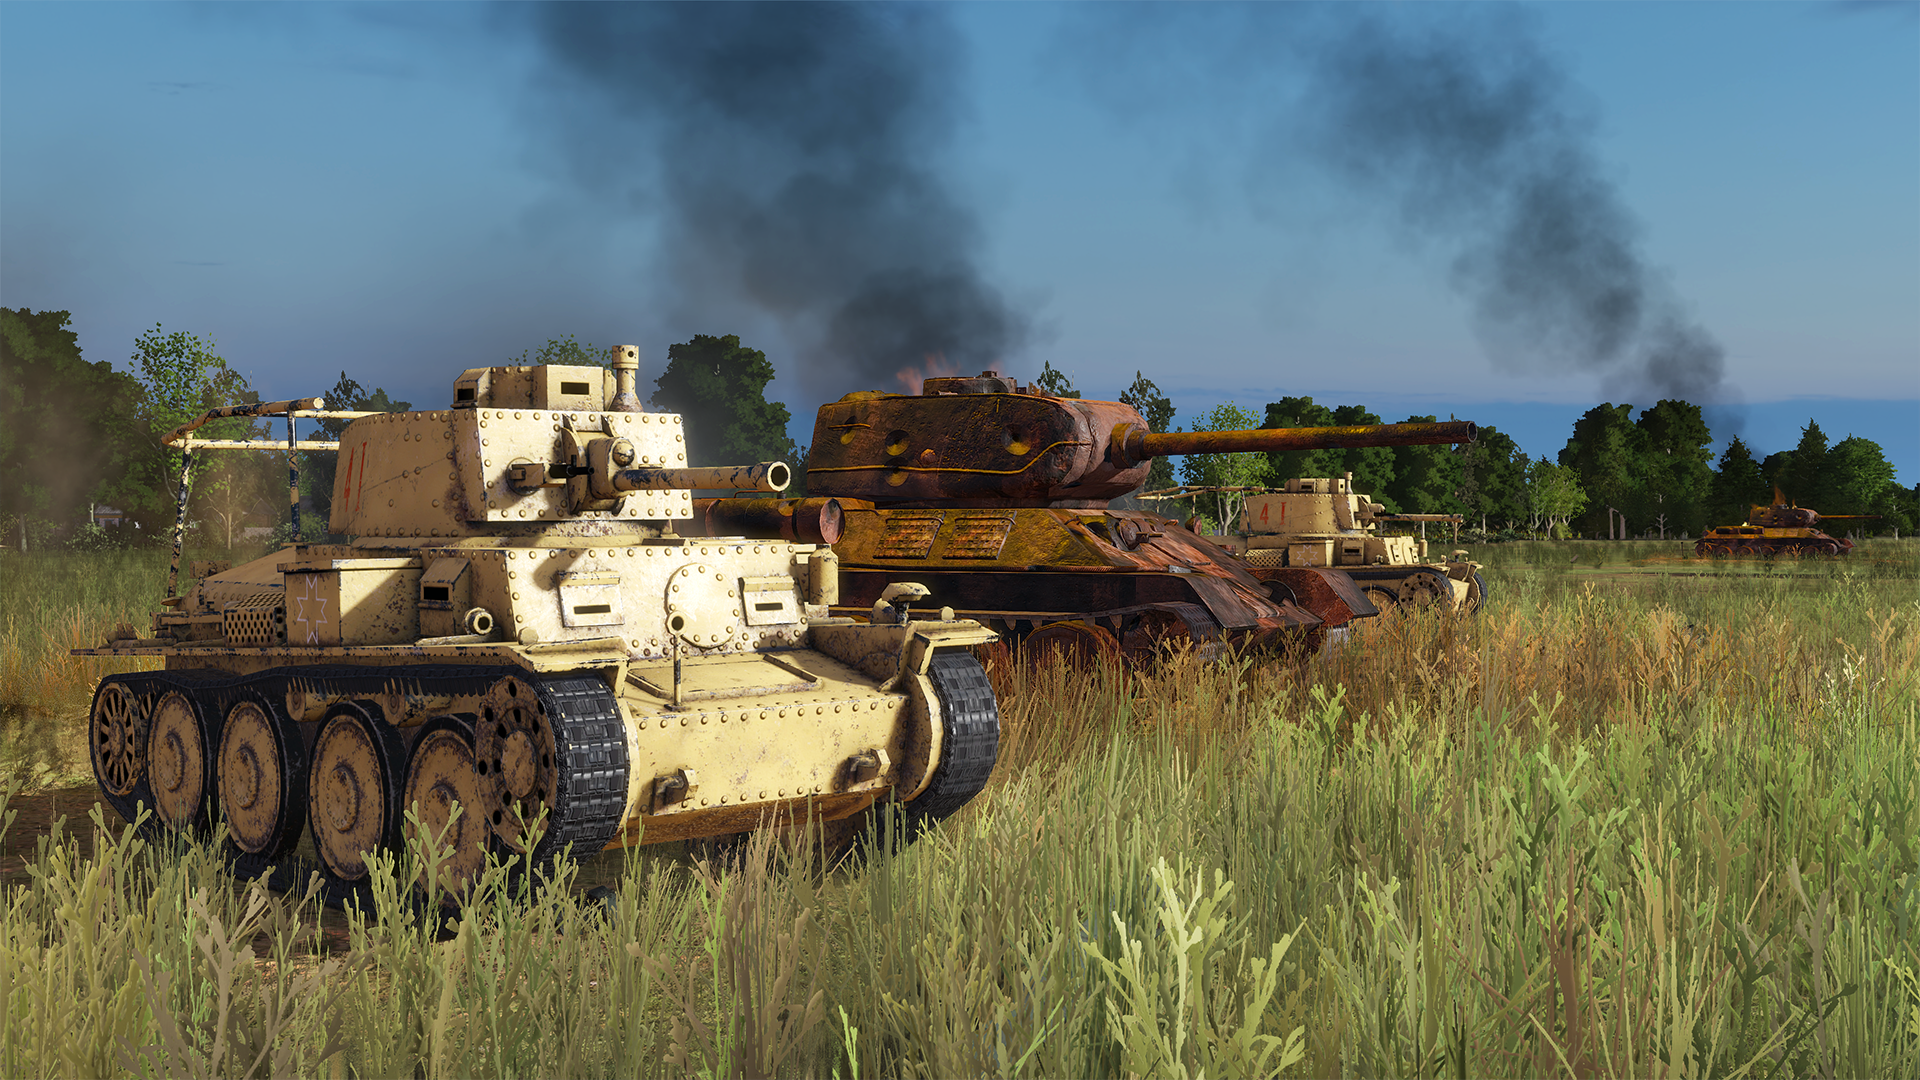 Crazy long tank 2v2 battle literally non stop fighting : r